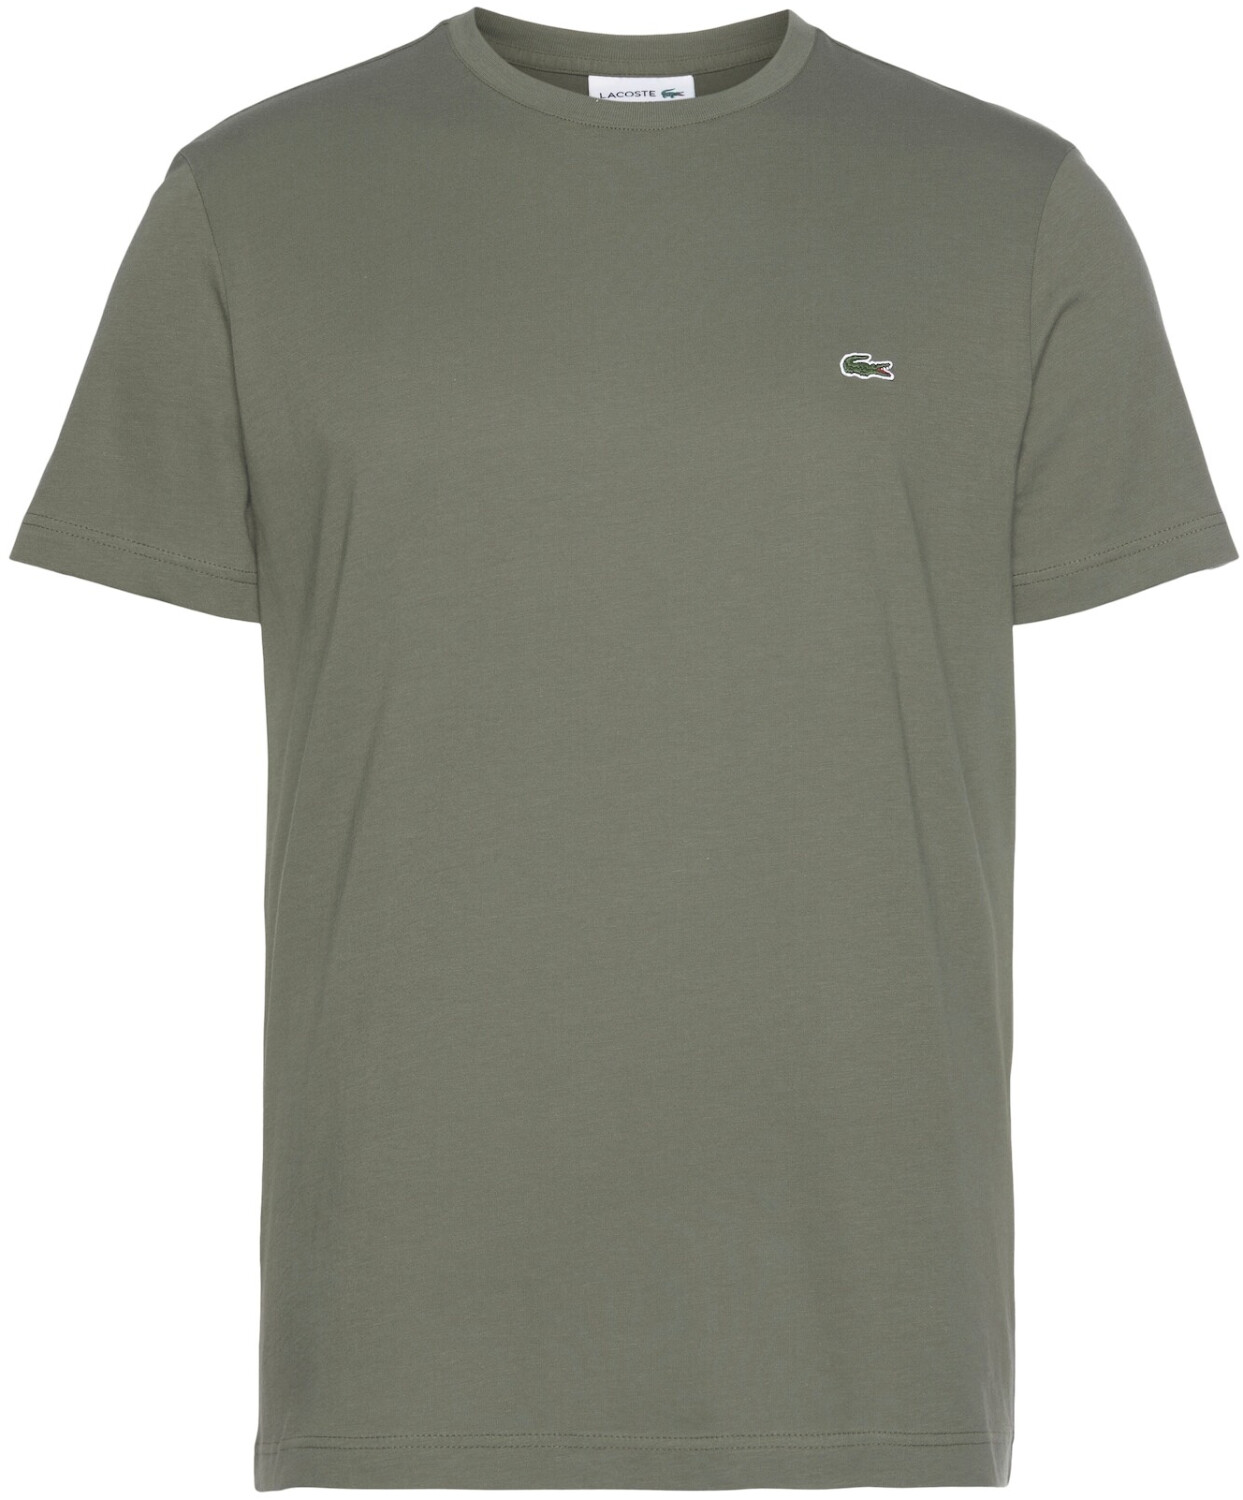 Lacoste Men's Crew Neck Jersey T-Shirt (TH2038) tank olive ab 44,99 € |  Preisvergleich bei